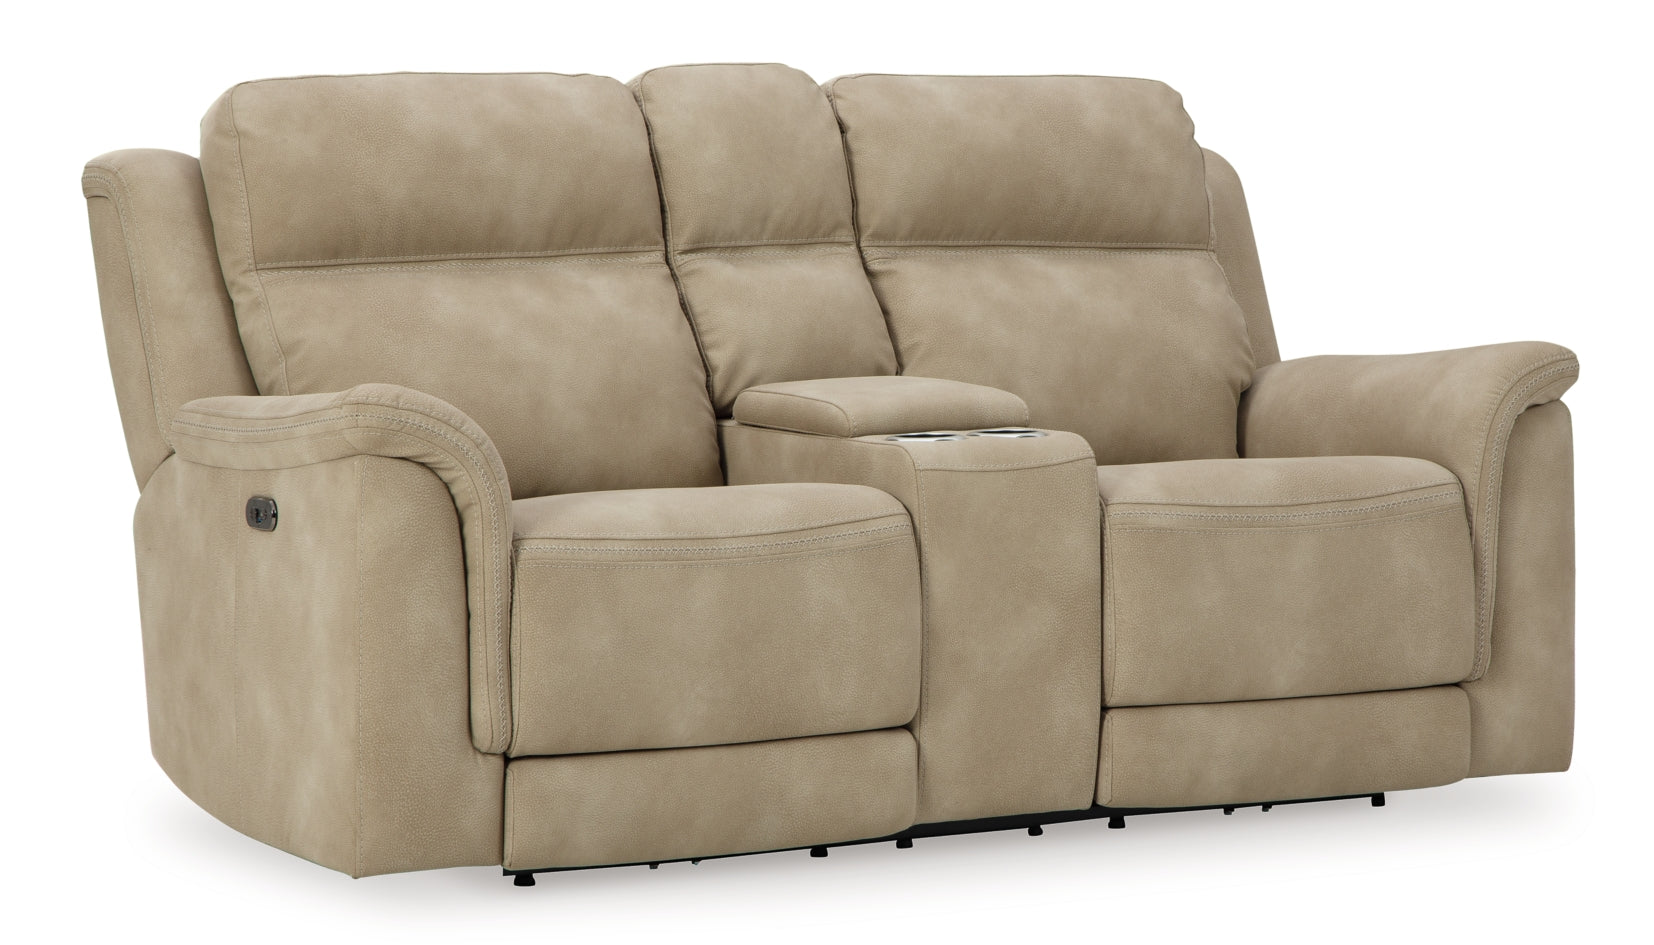 Next-Gen DuraPella Sofa, Loveseat and Recliner - PKG008168 - furniture place usa